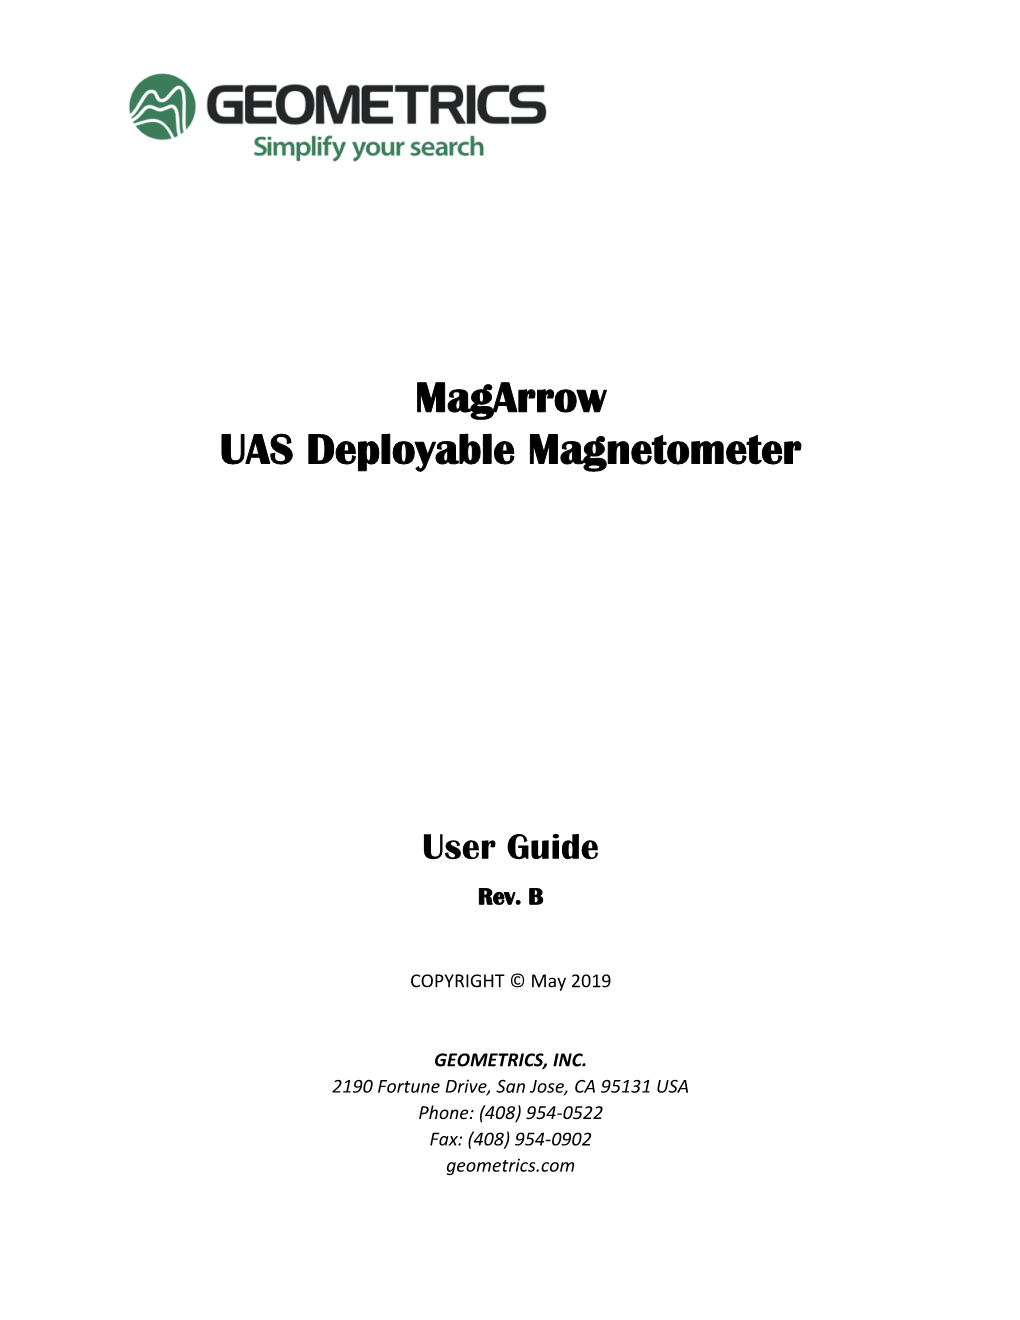 Magarrow UAS Deployable Magnetometer